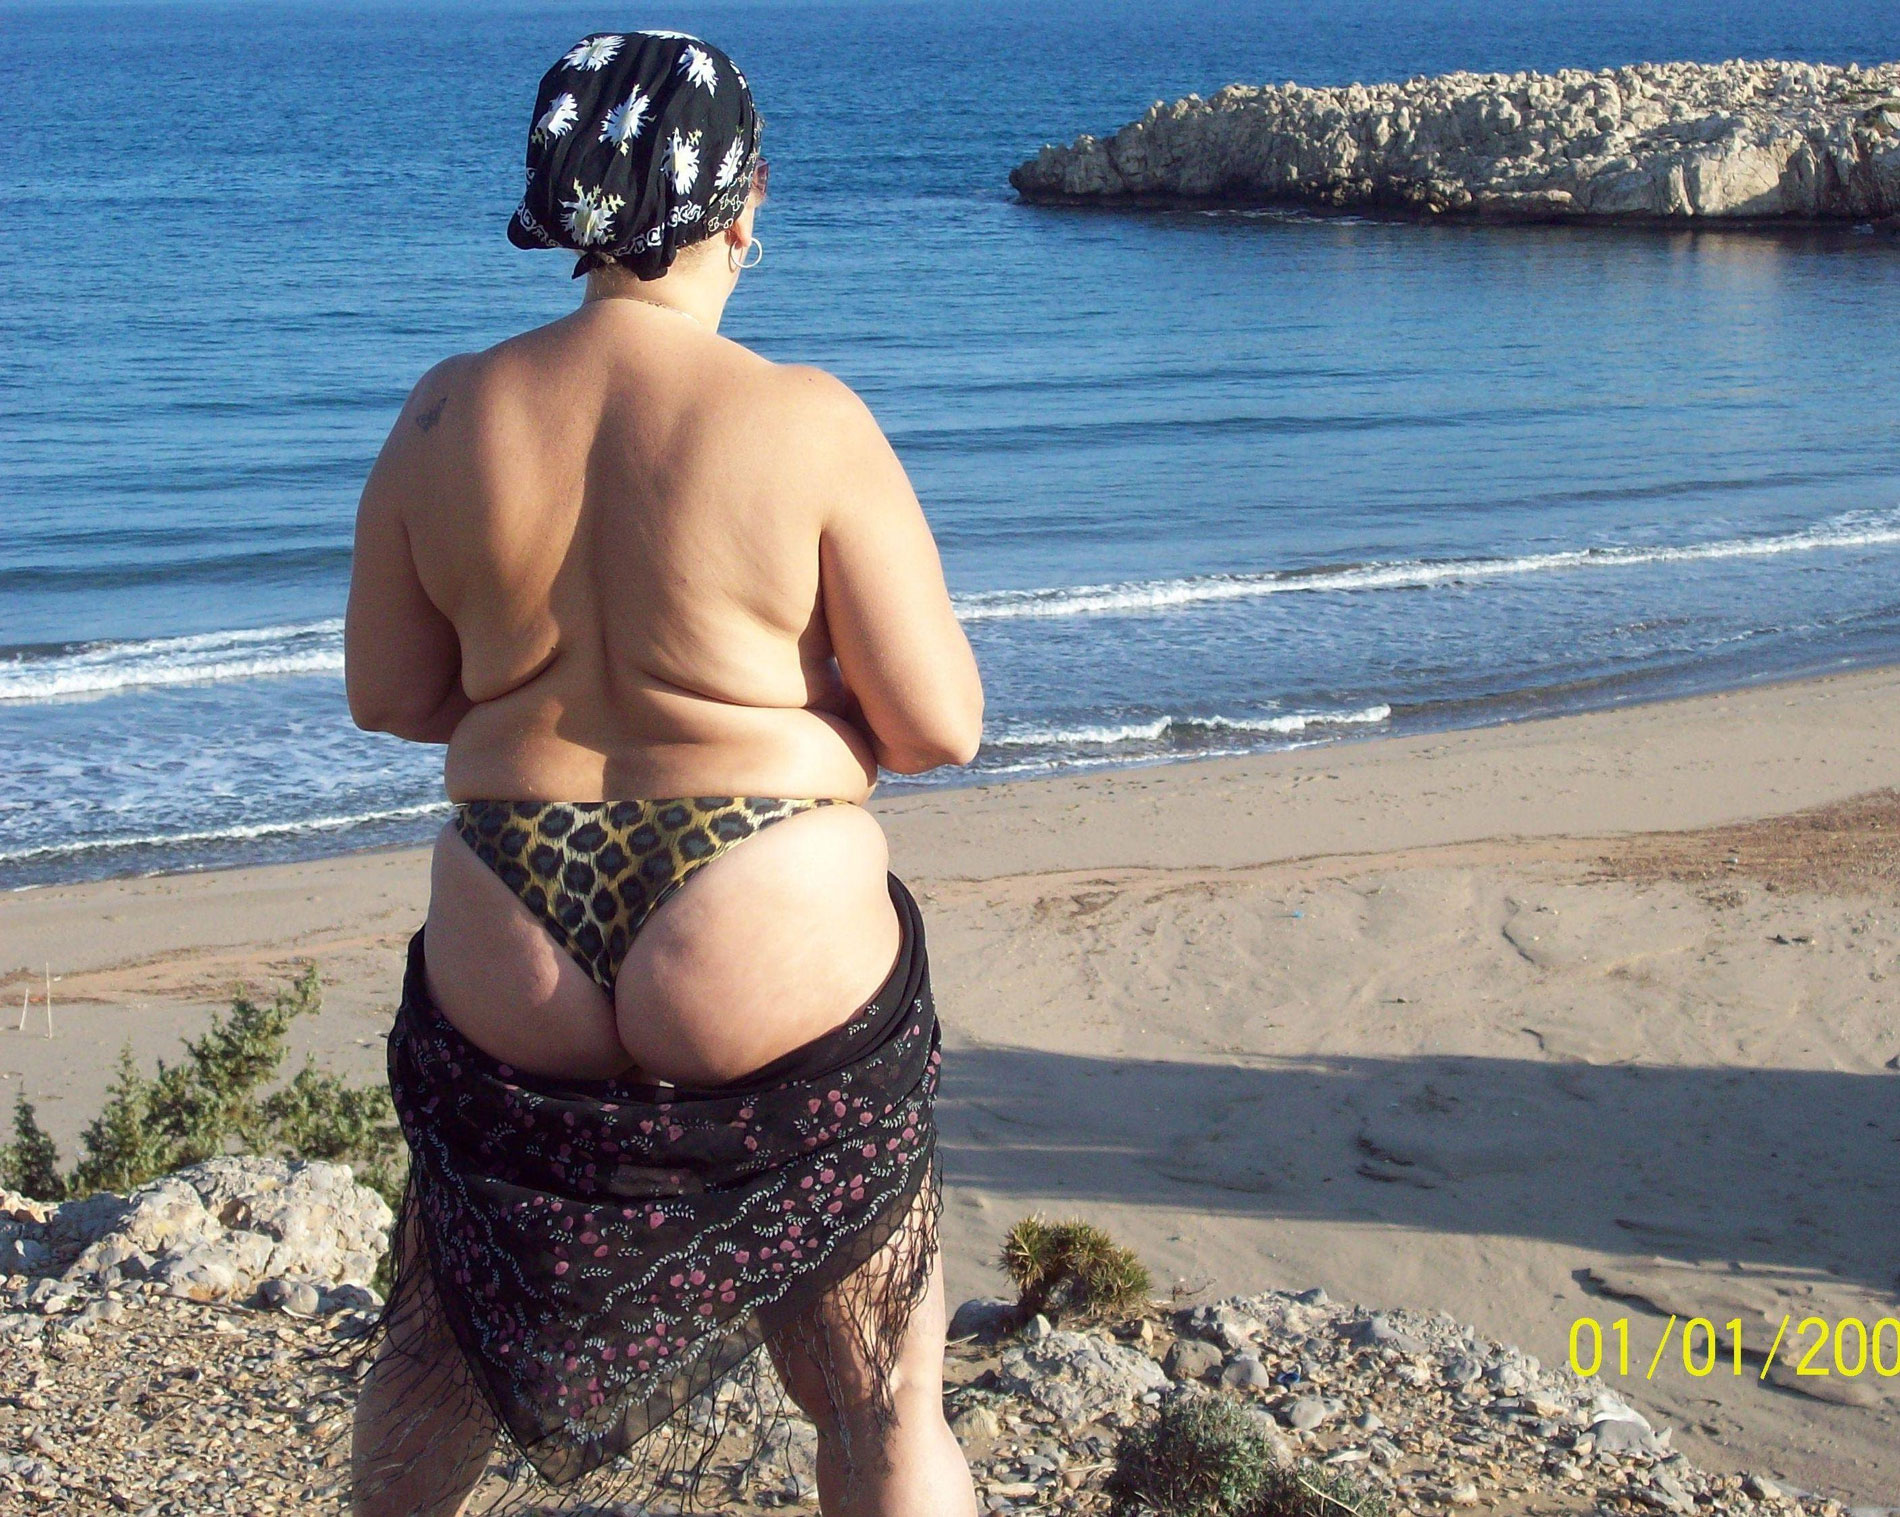 Fat Granny Beach Nudist - Fat nudist moms and grannies sunbathing nude on beach